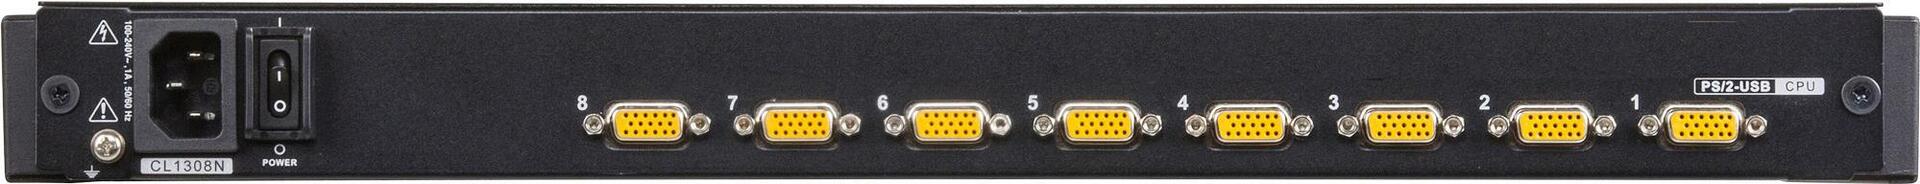 ATEN CL1308N KVMP-Switch, 8-Port, 48,30cm (19") LCD-Konsole, USB, PS/2, VGA, Tastatur (deutsch) mit LED-Beleuchtung (CL1308N-ATA-GG)